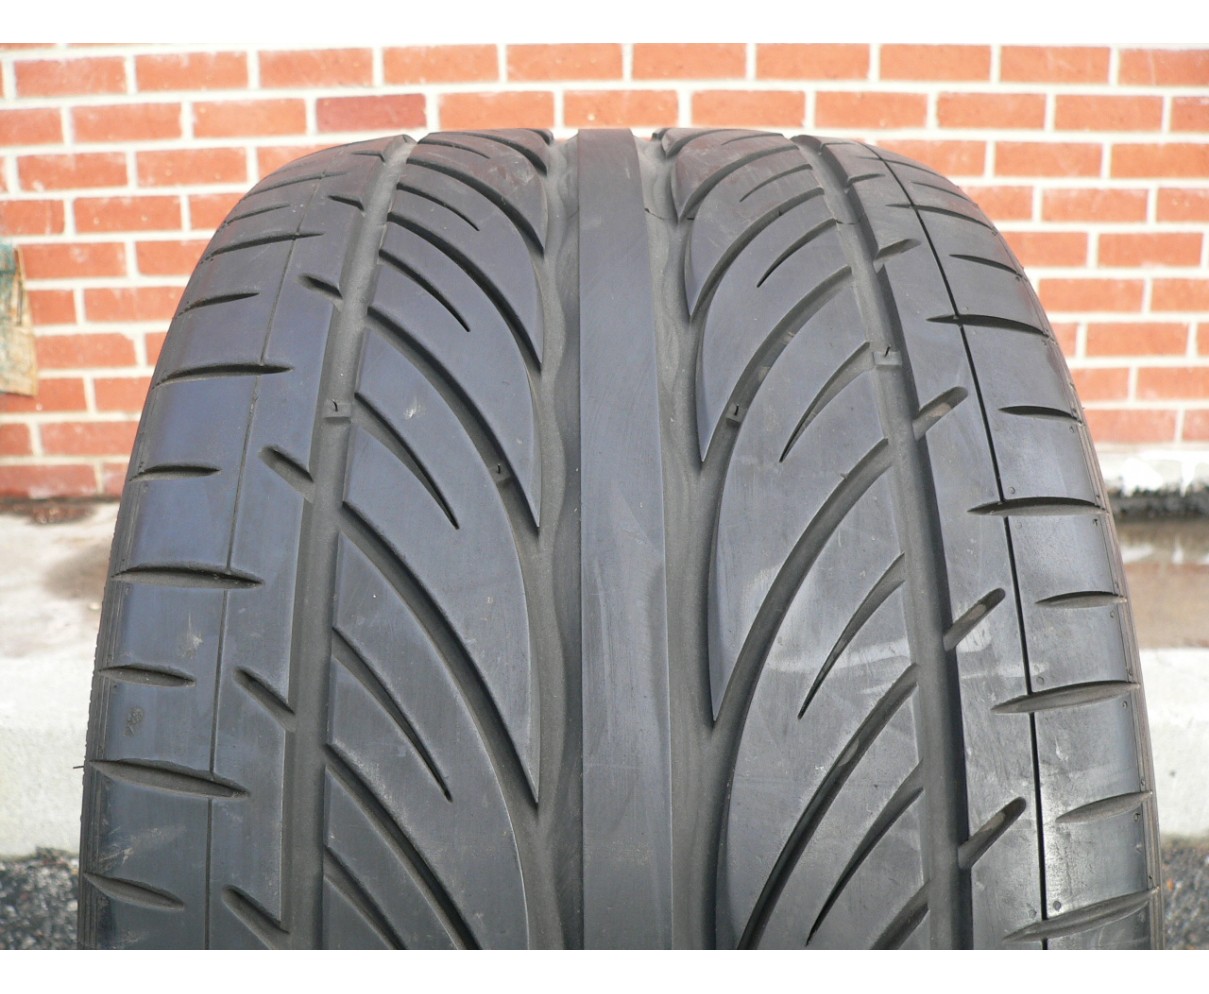 Evo tires 30 2 295 used Ventus Hankook 80% life 100Y 19 V12